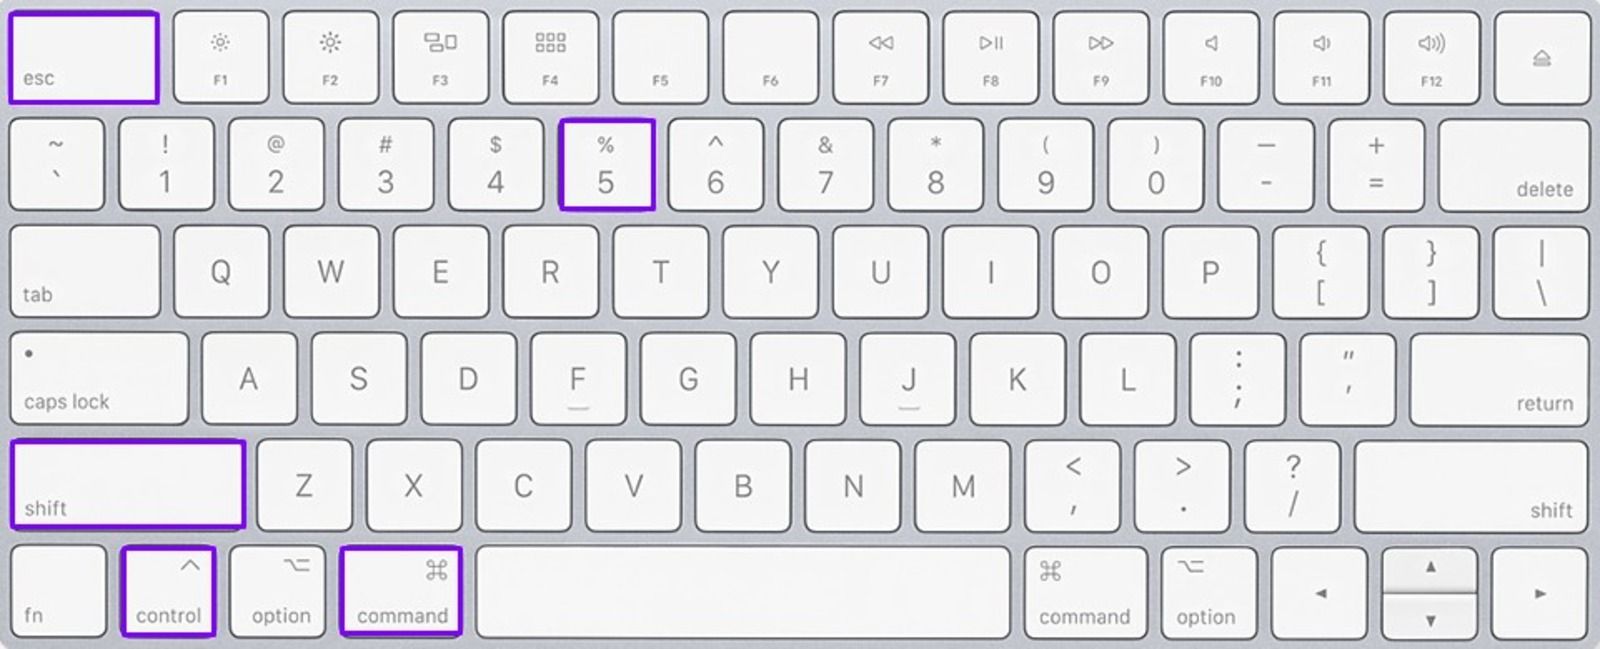 keyboard shortcuts for screen record on Mac